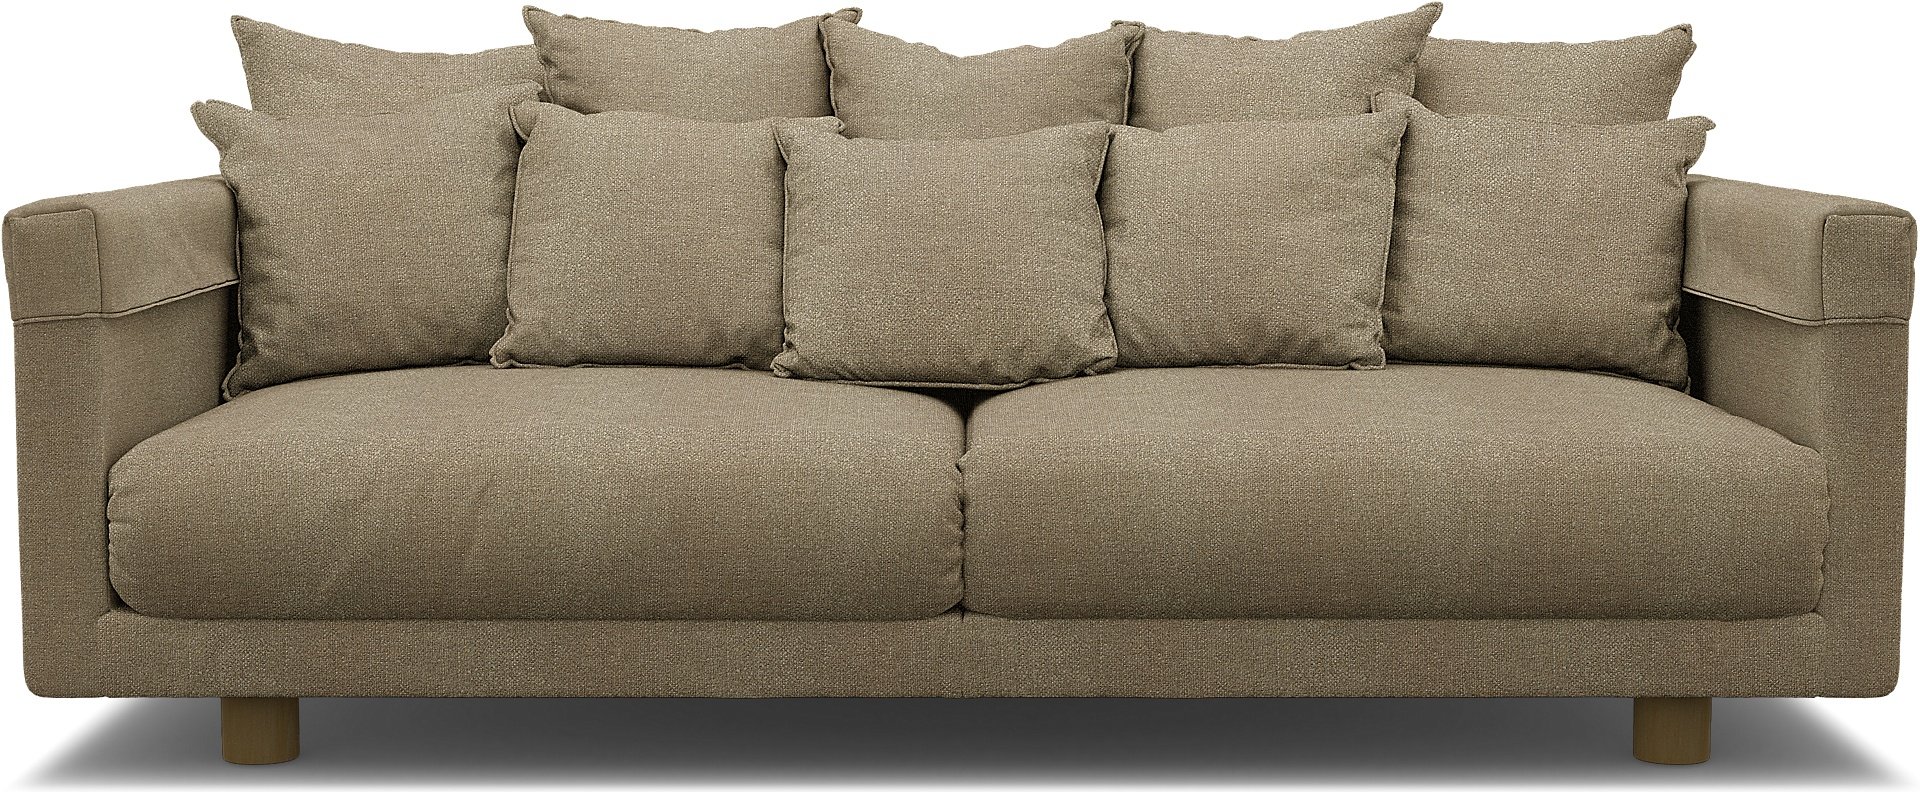 IKEA - Stockholm 2017 3 Seater Sofa Cover, Pebble, Boucle & Texture - Bemz